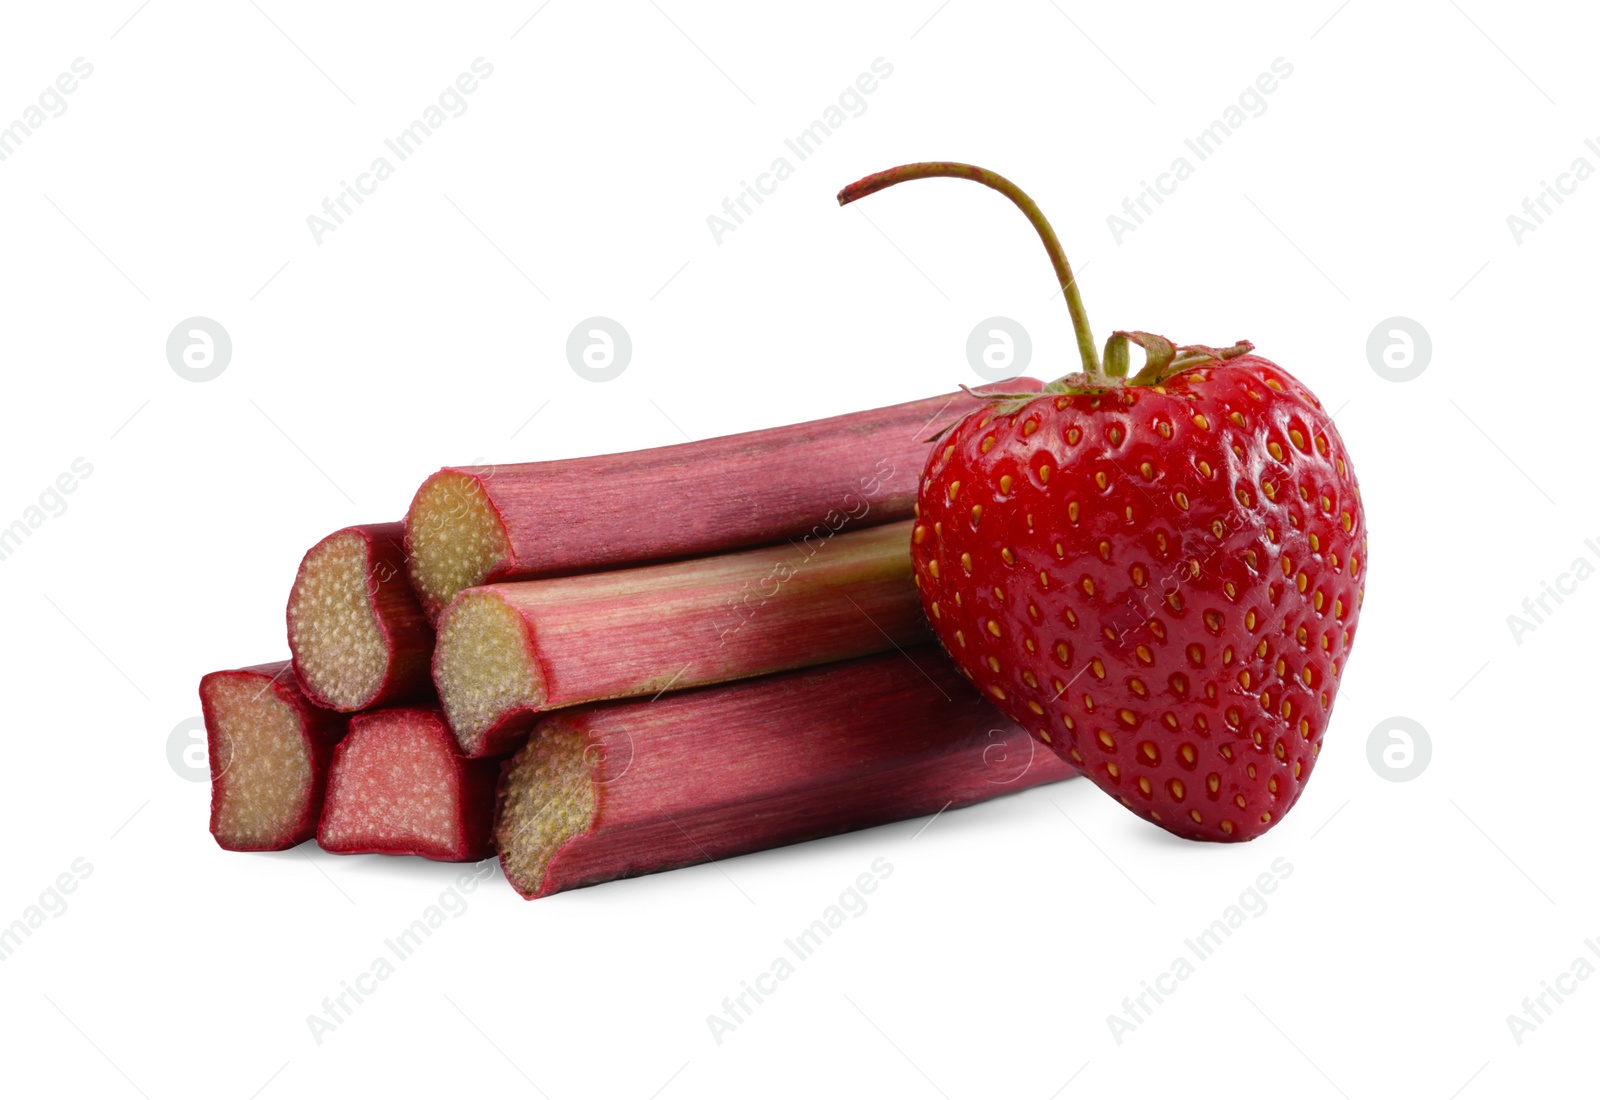 Photo of Stalks of fresh rhubarb and strawberry isolated on white